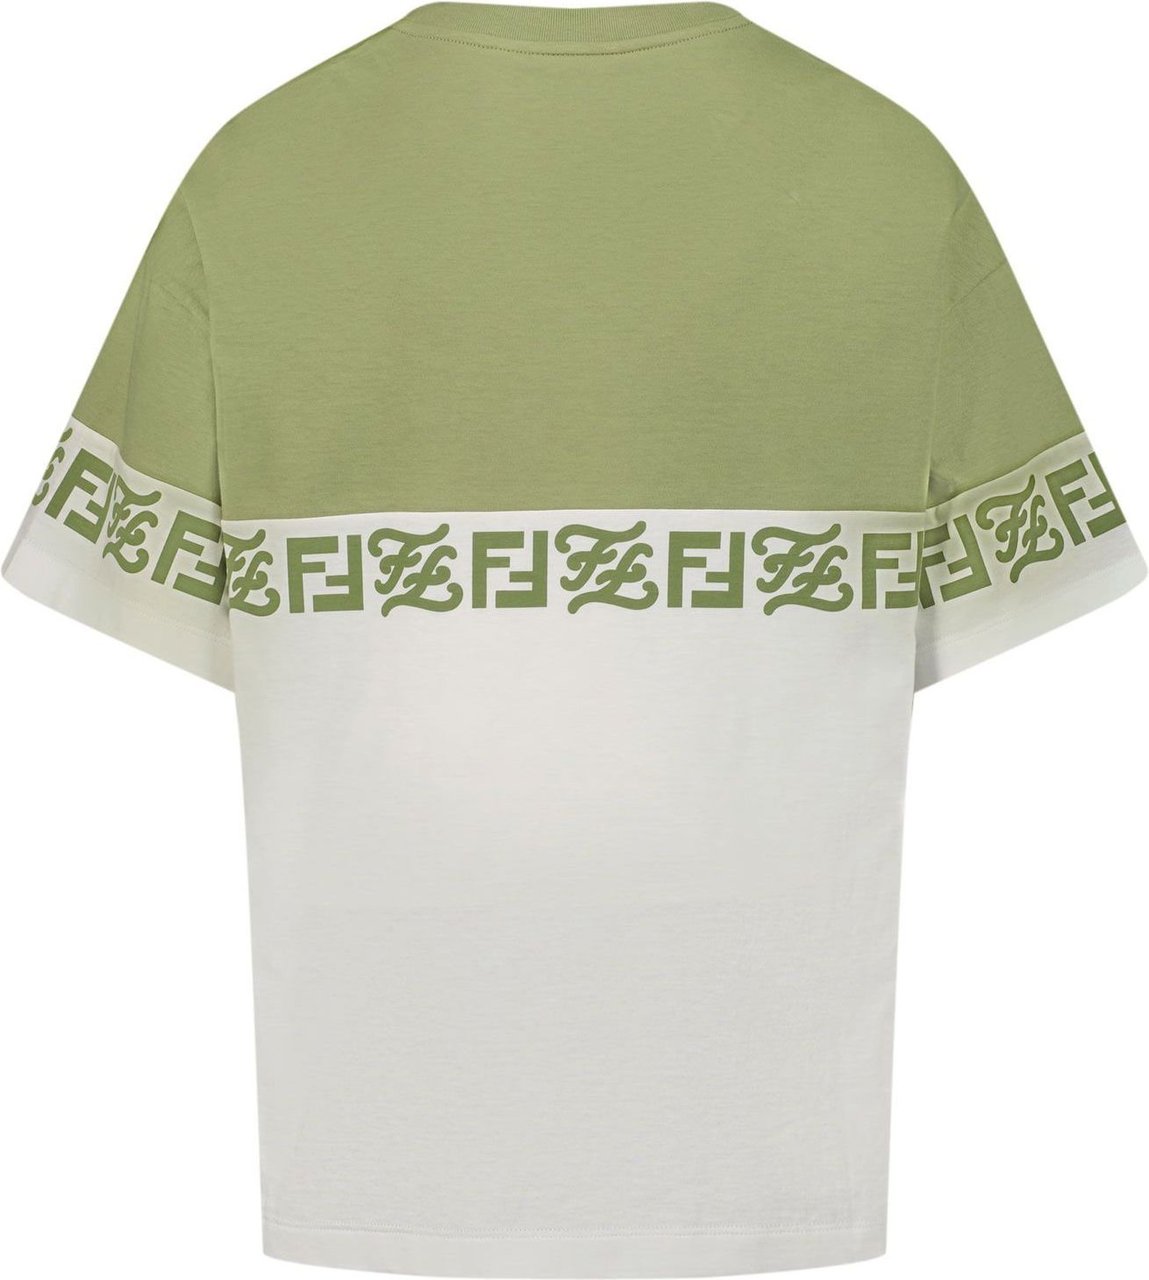 Fendi Fendi JMI393 7AJ kinder t-shirt olijf groen Groen